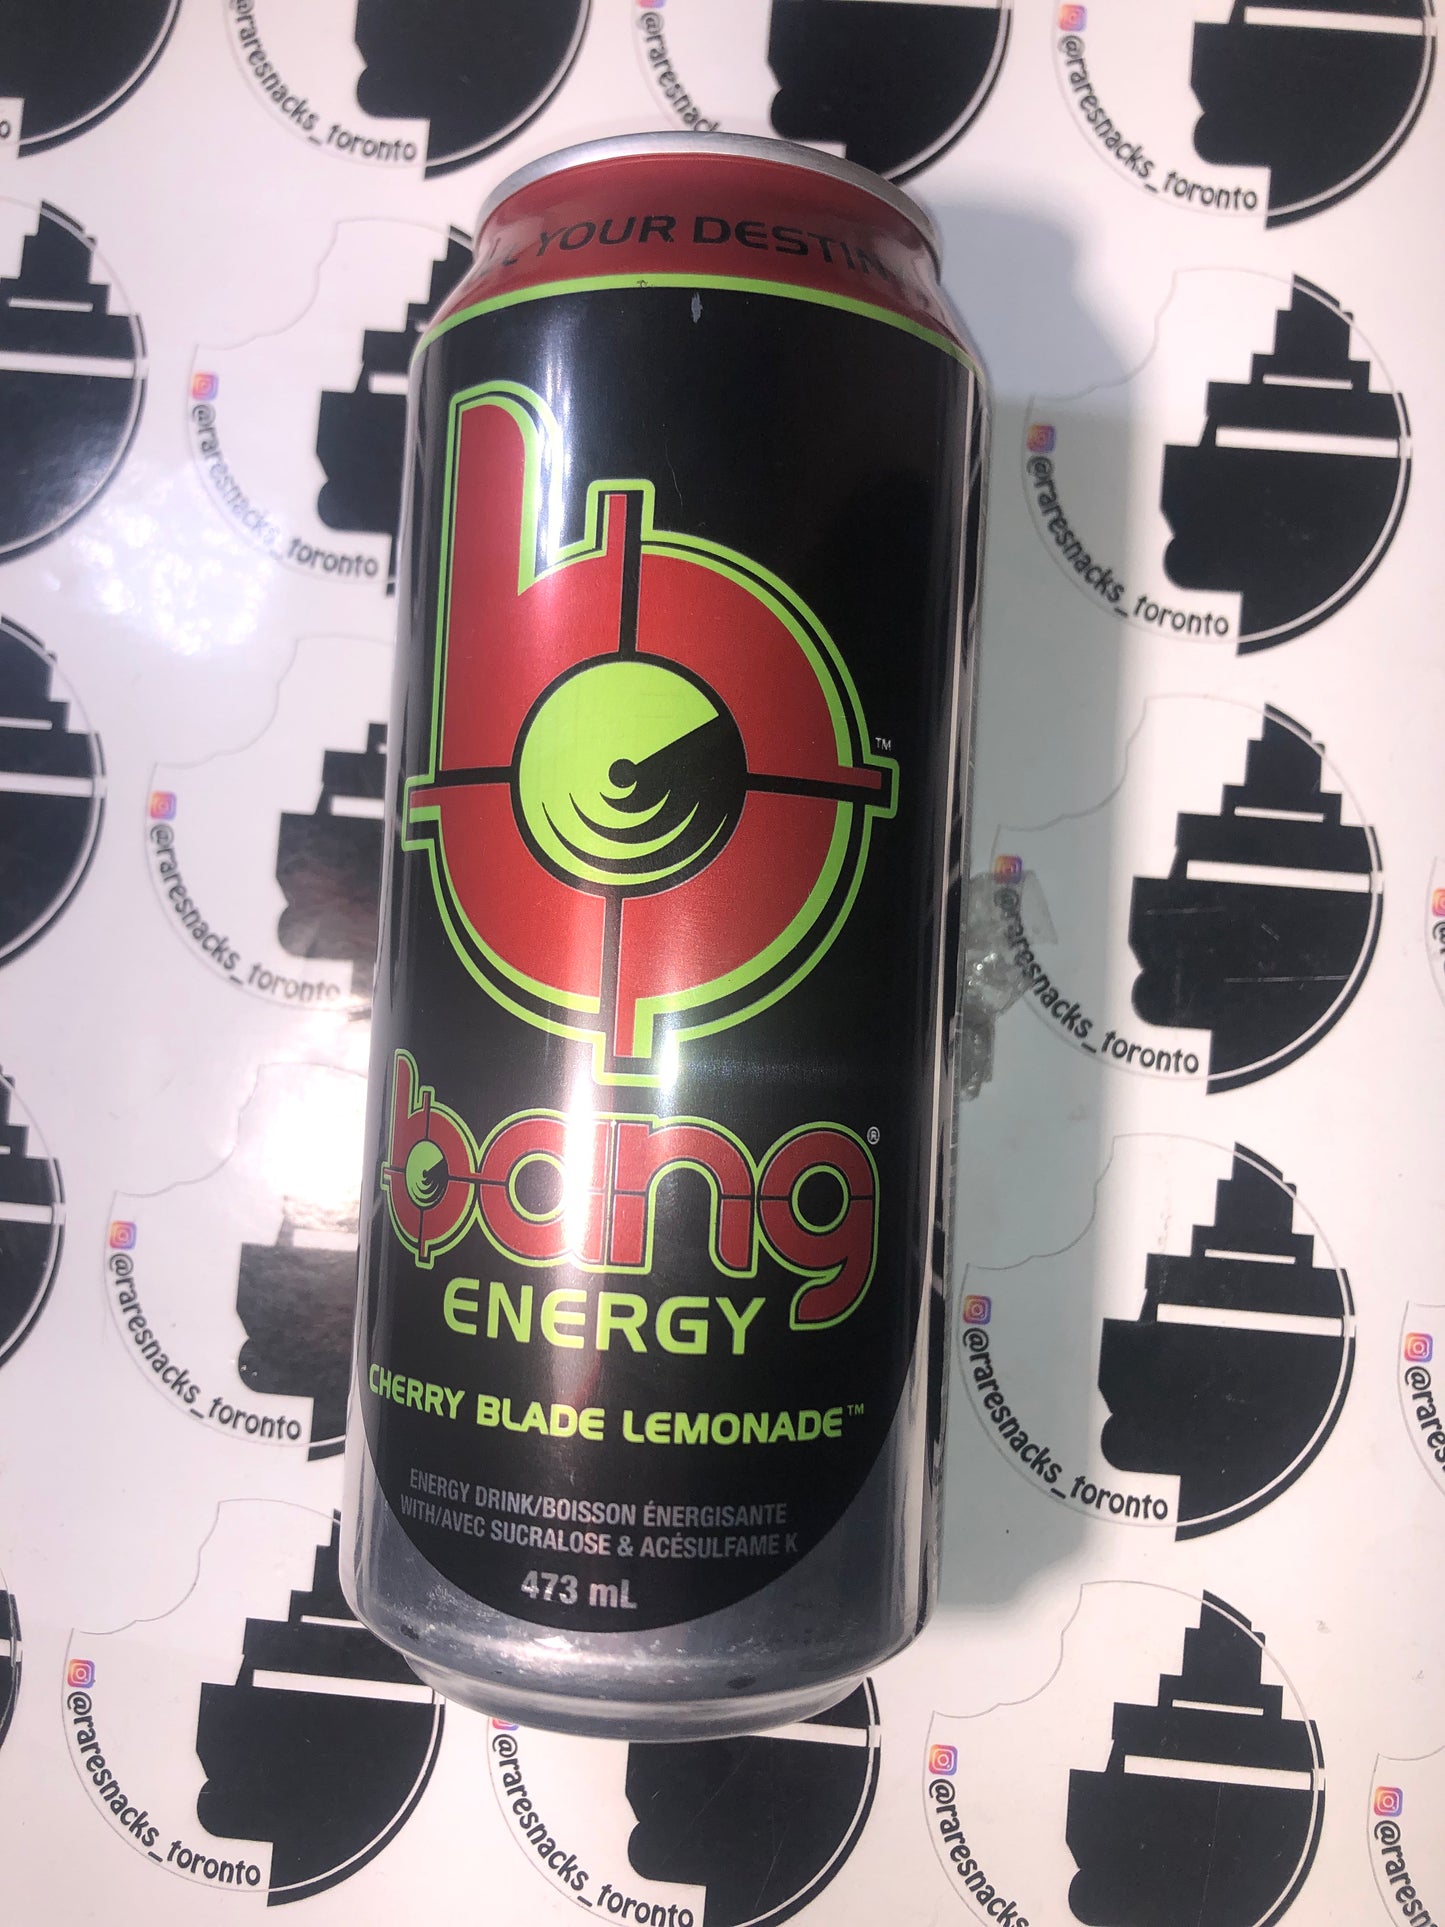 Bang Energy Cherry Blade Lemonade